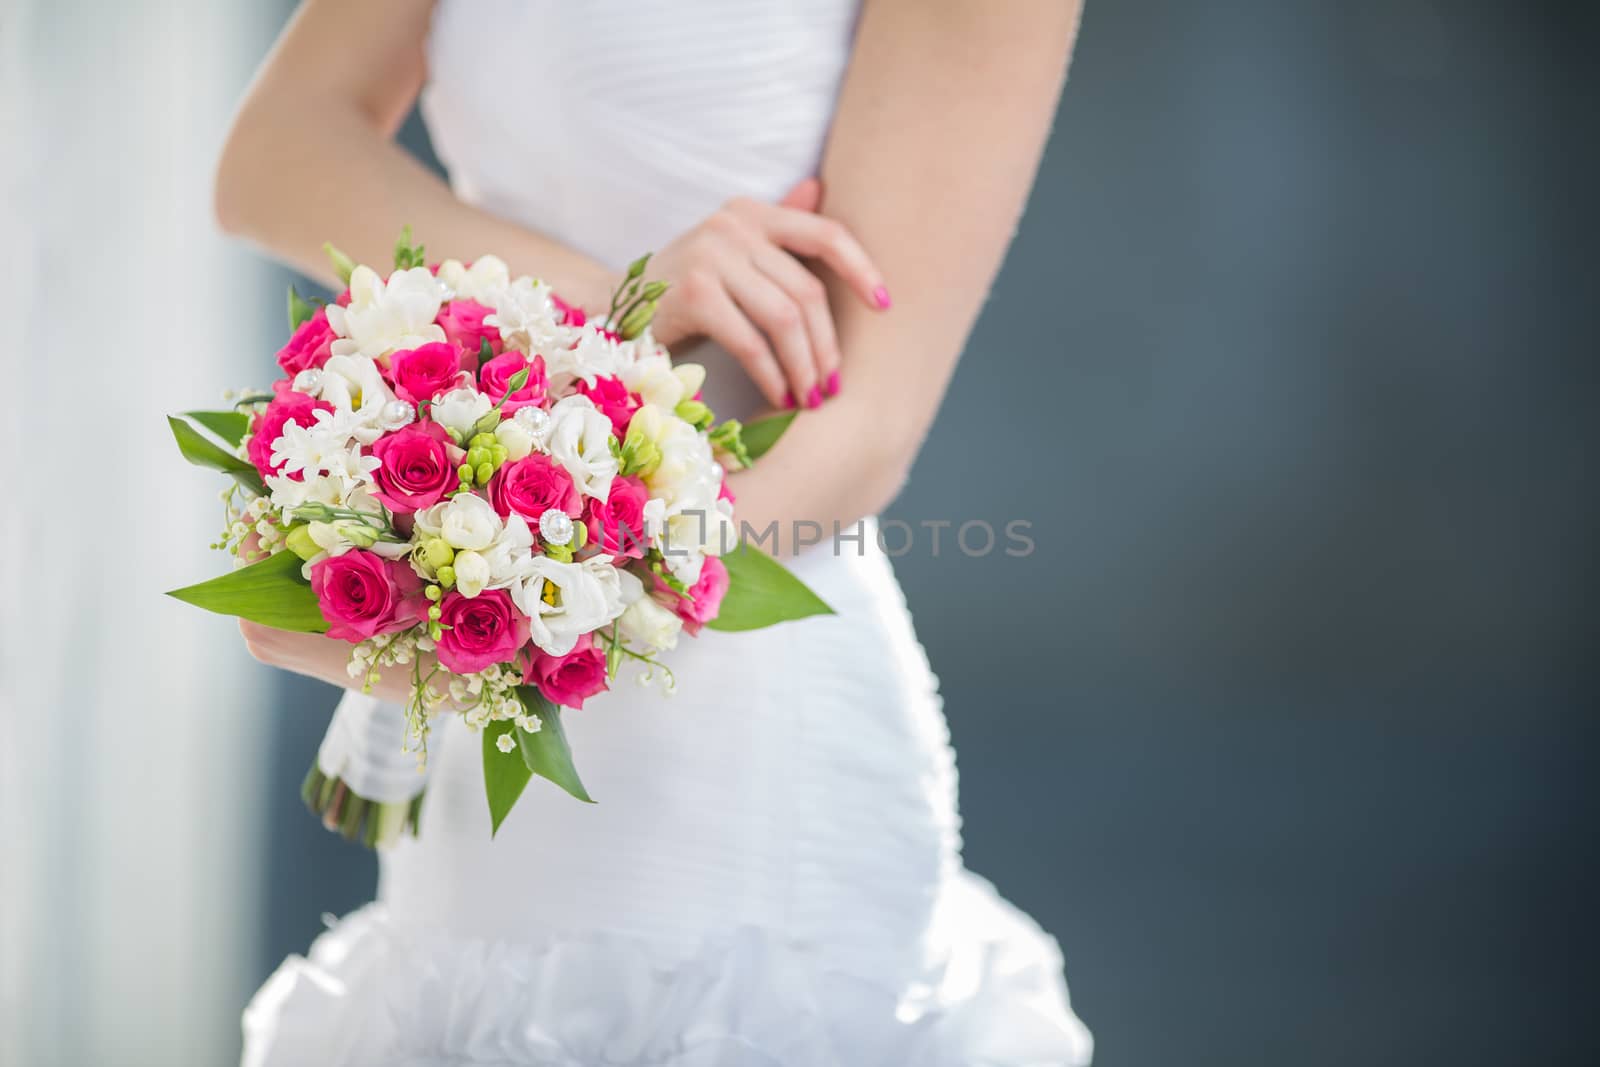 Beautiful wedding bouquet in hands of the bride by viktor_cap